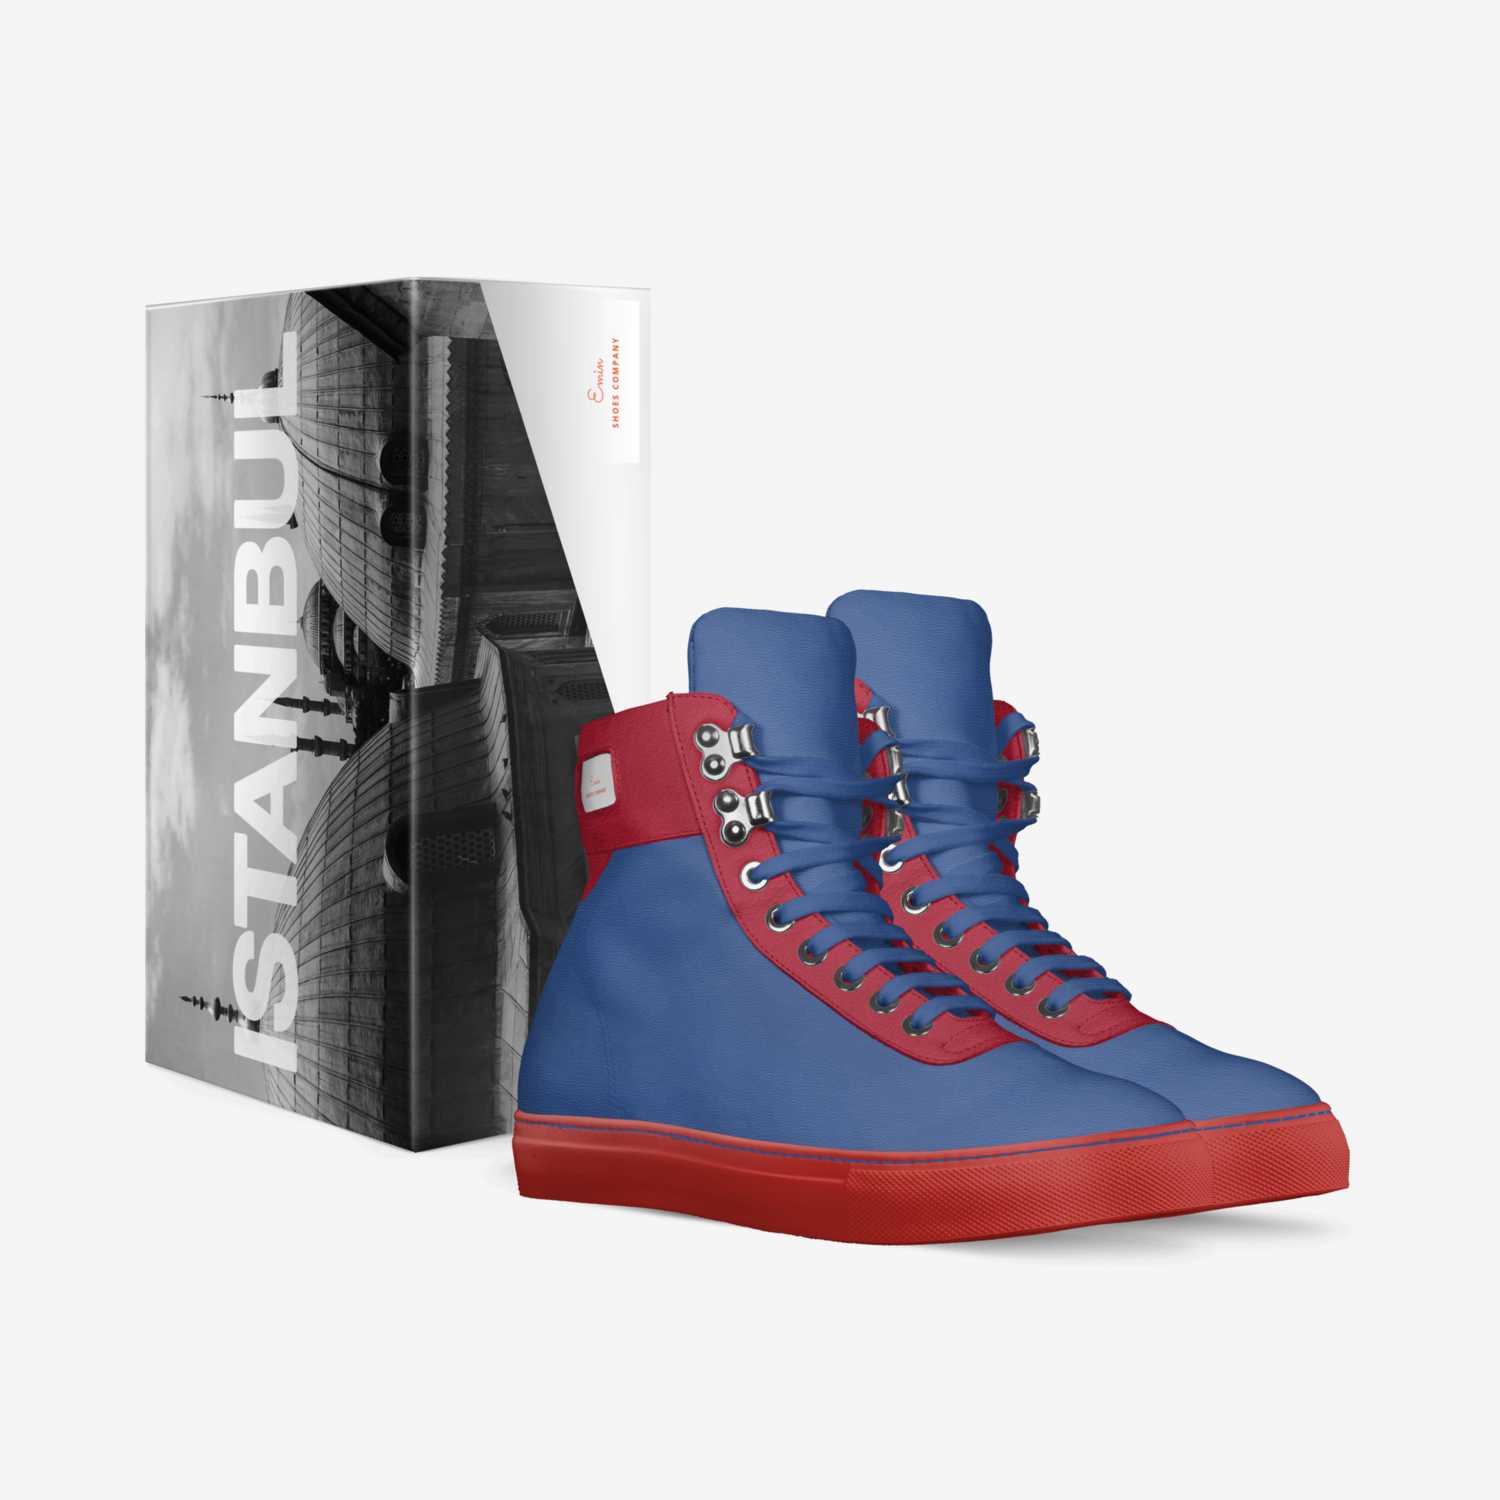 Save custom made in Italy shoes by Muhammet Emin Kaya | Box view